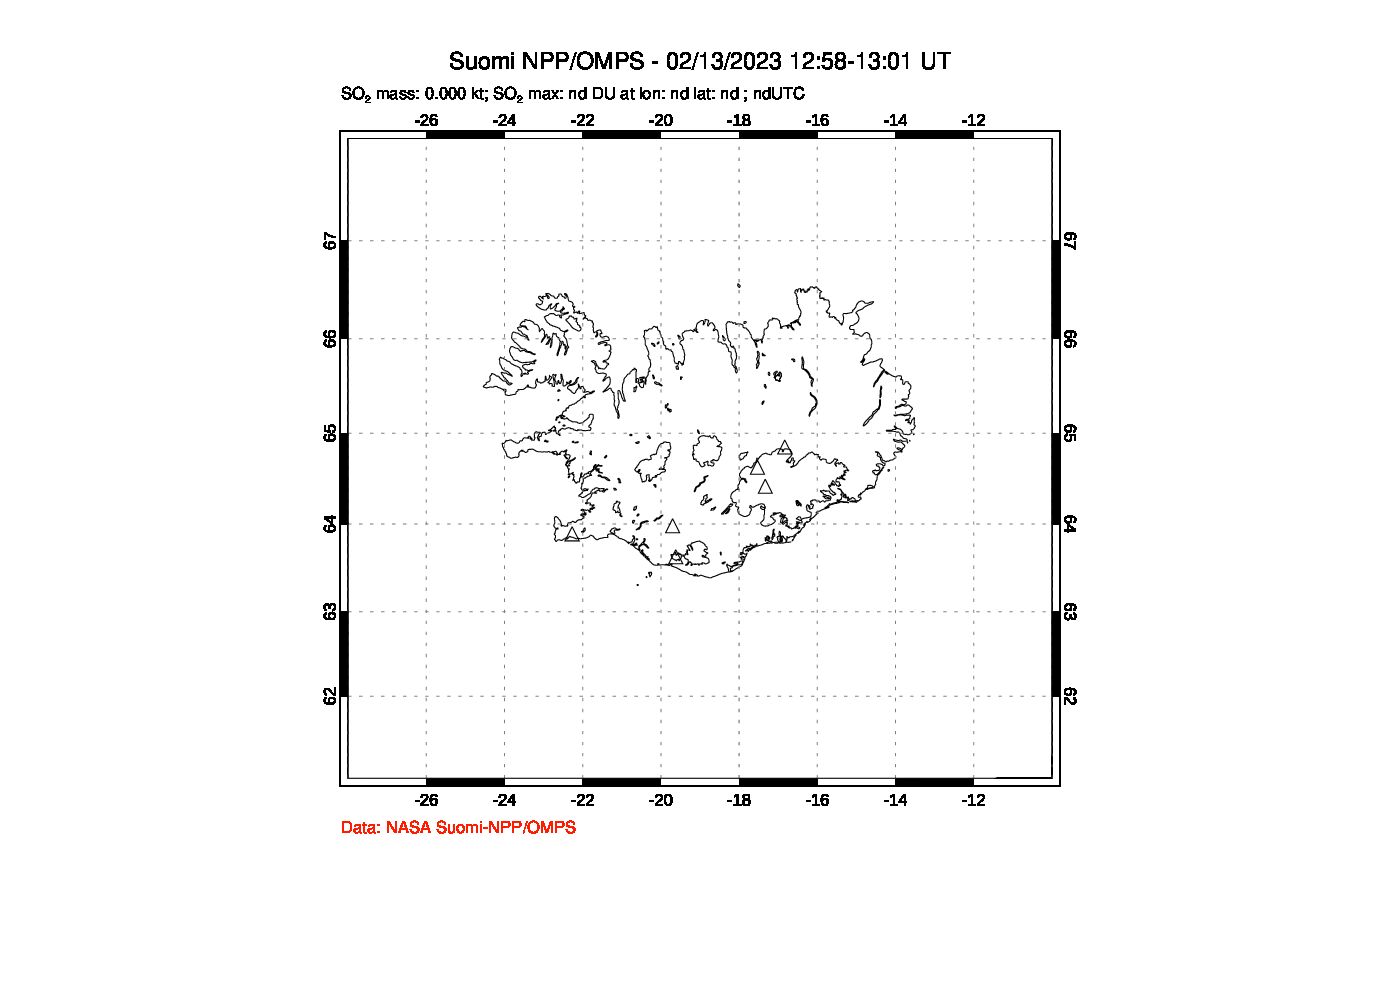 A sulfur dioxide image over Iceland on Feb 13, 2023.